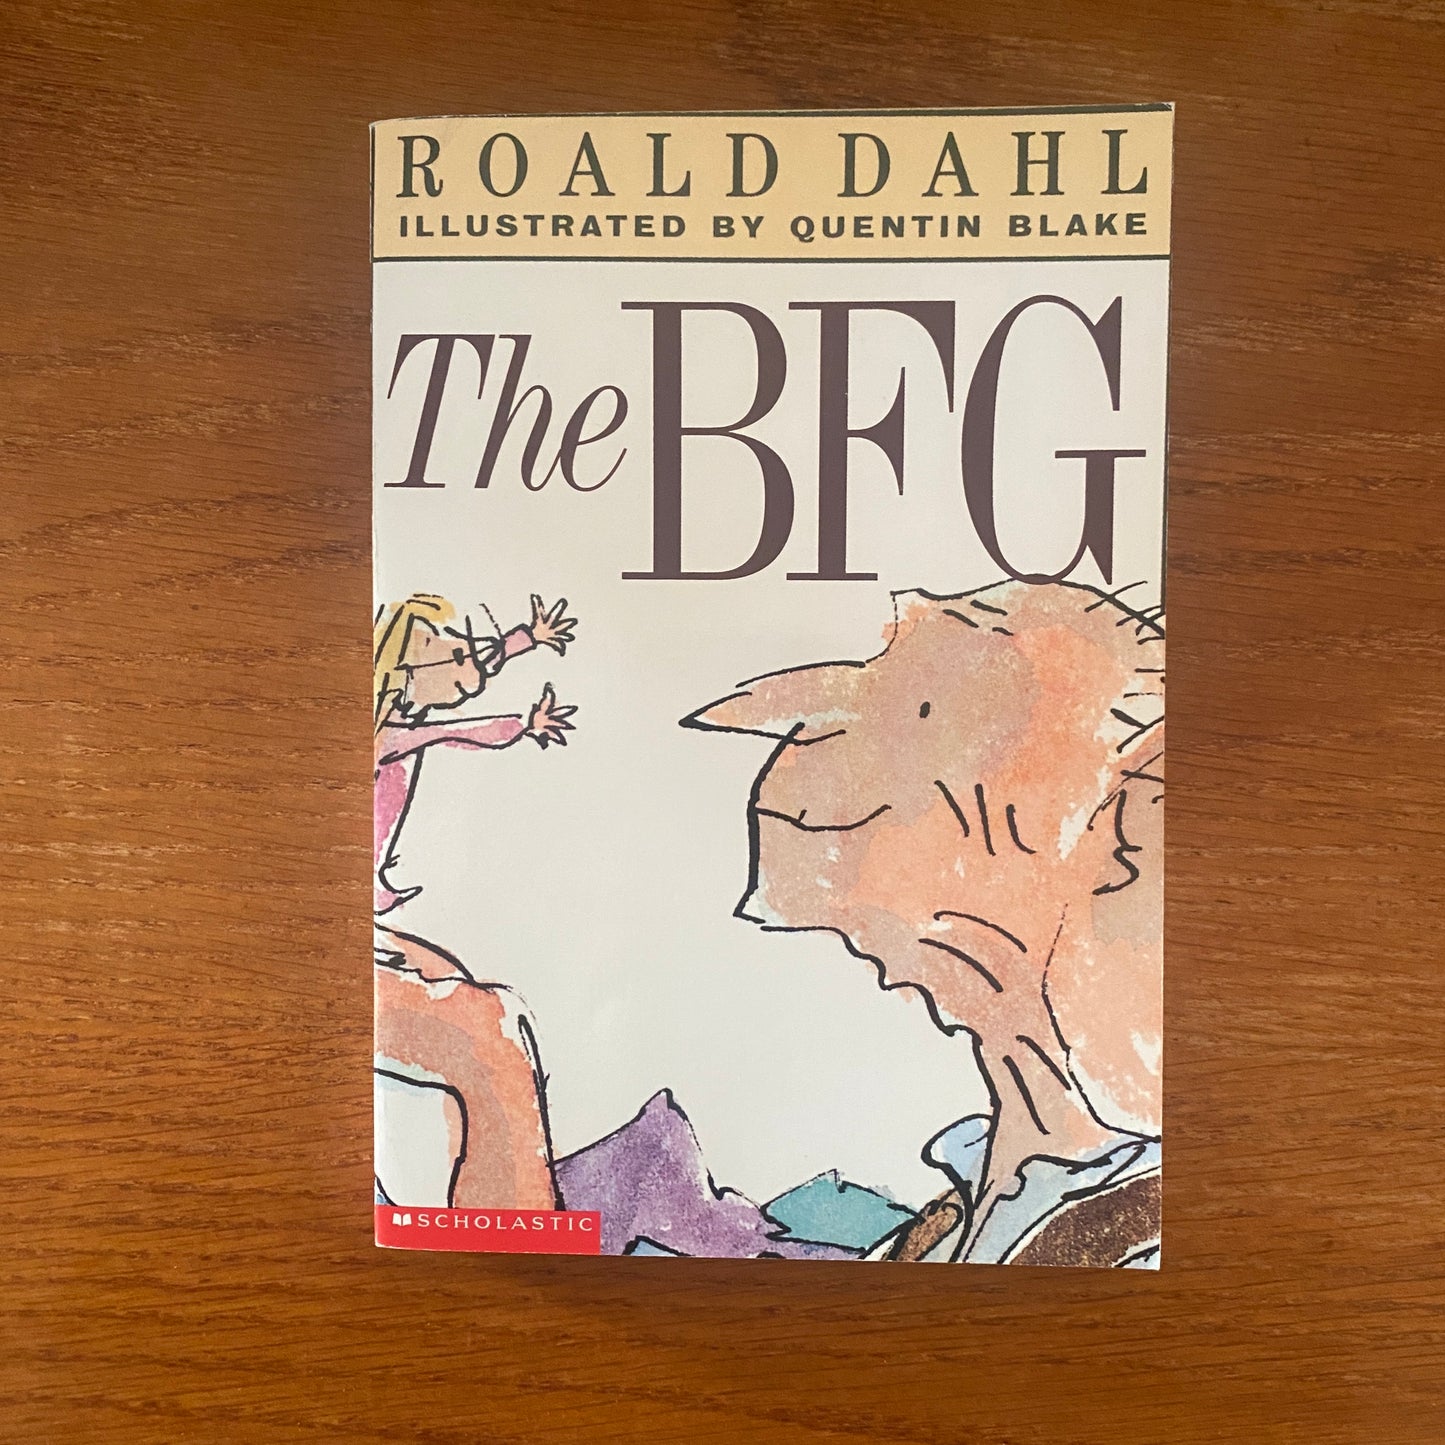 Roald Dahl - The BFG